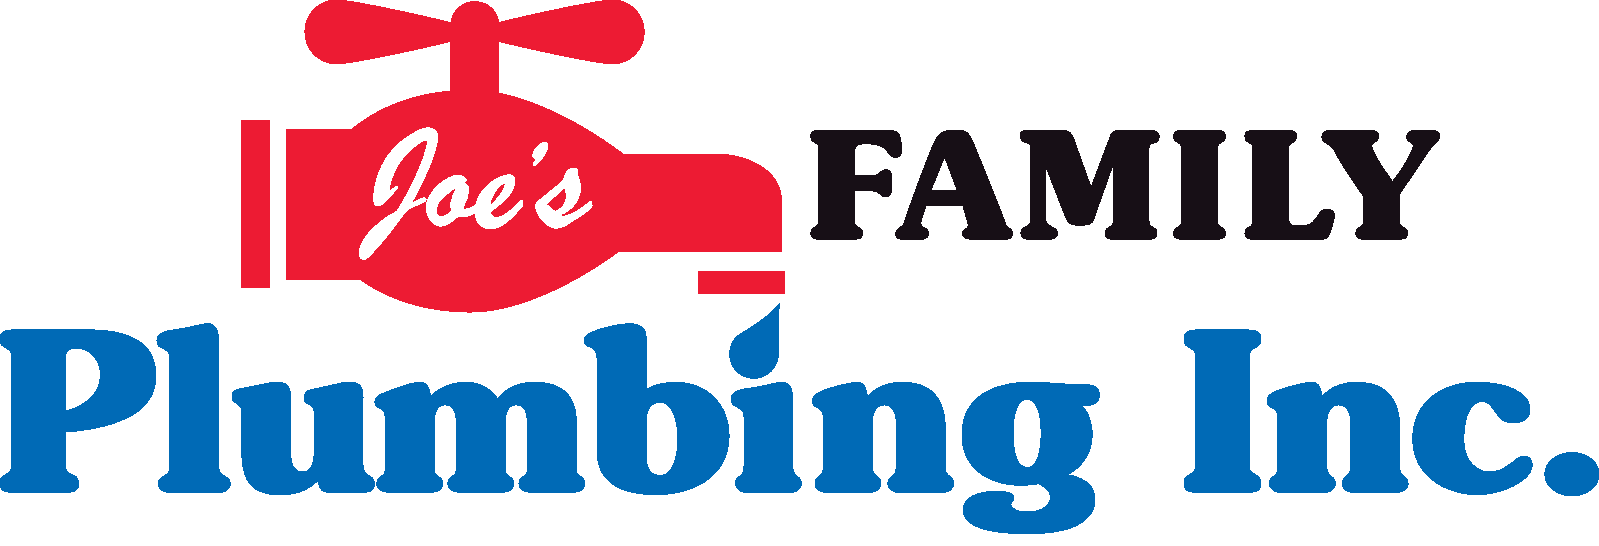 Joes Family Plumbing Inc logo (2).png